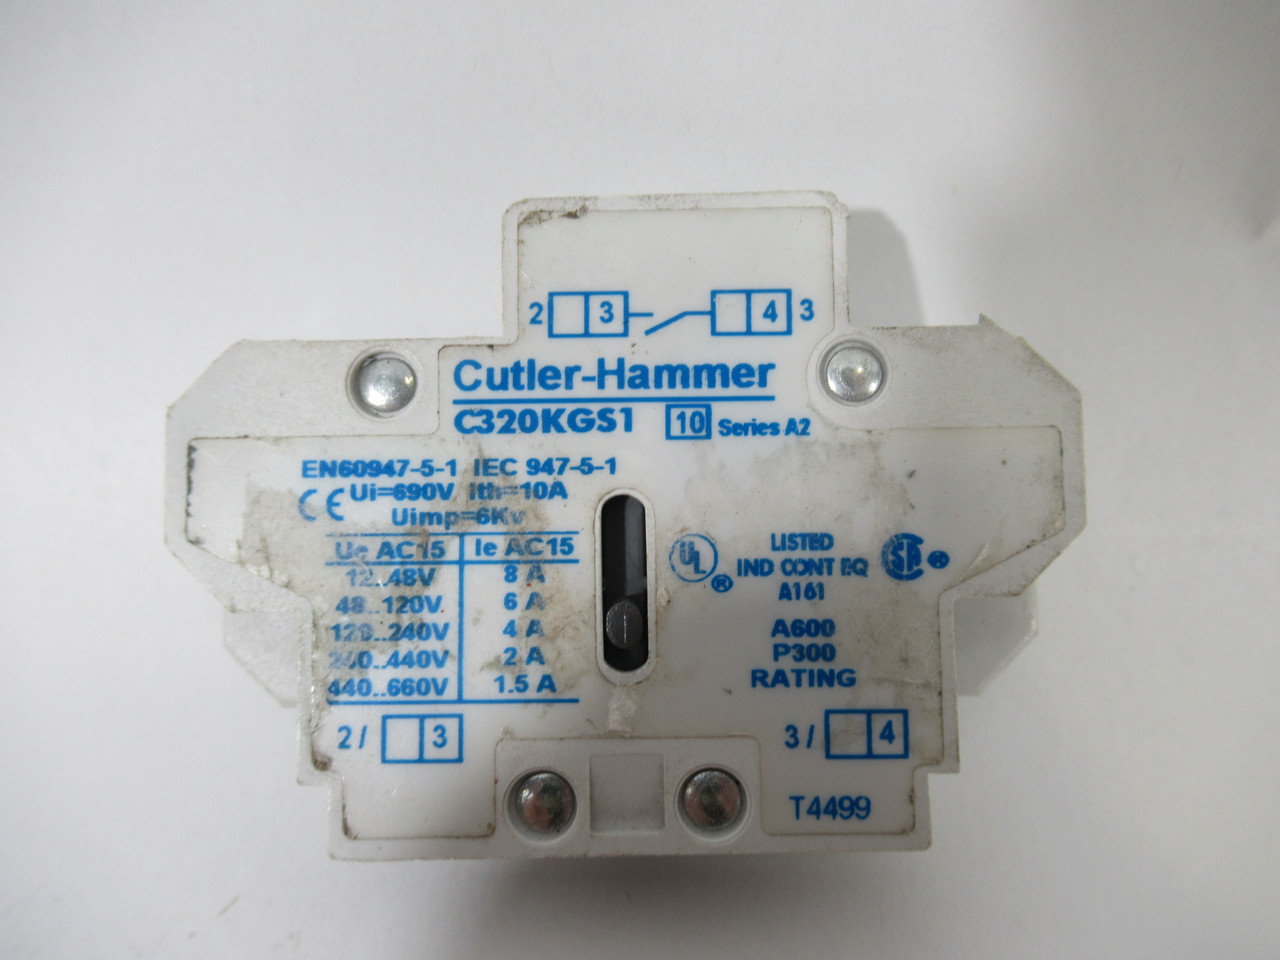 Cutler-Hammer C320KGS1 Series A2 Contact Block 1N/O *Broken Clip* USED